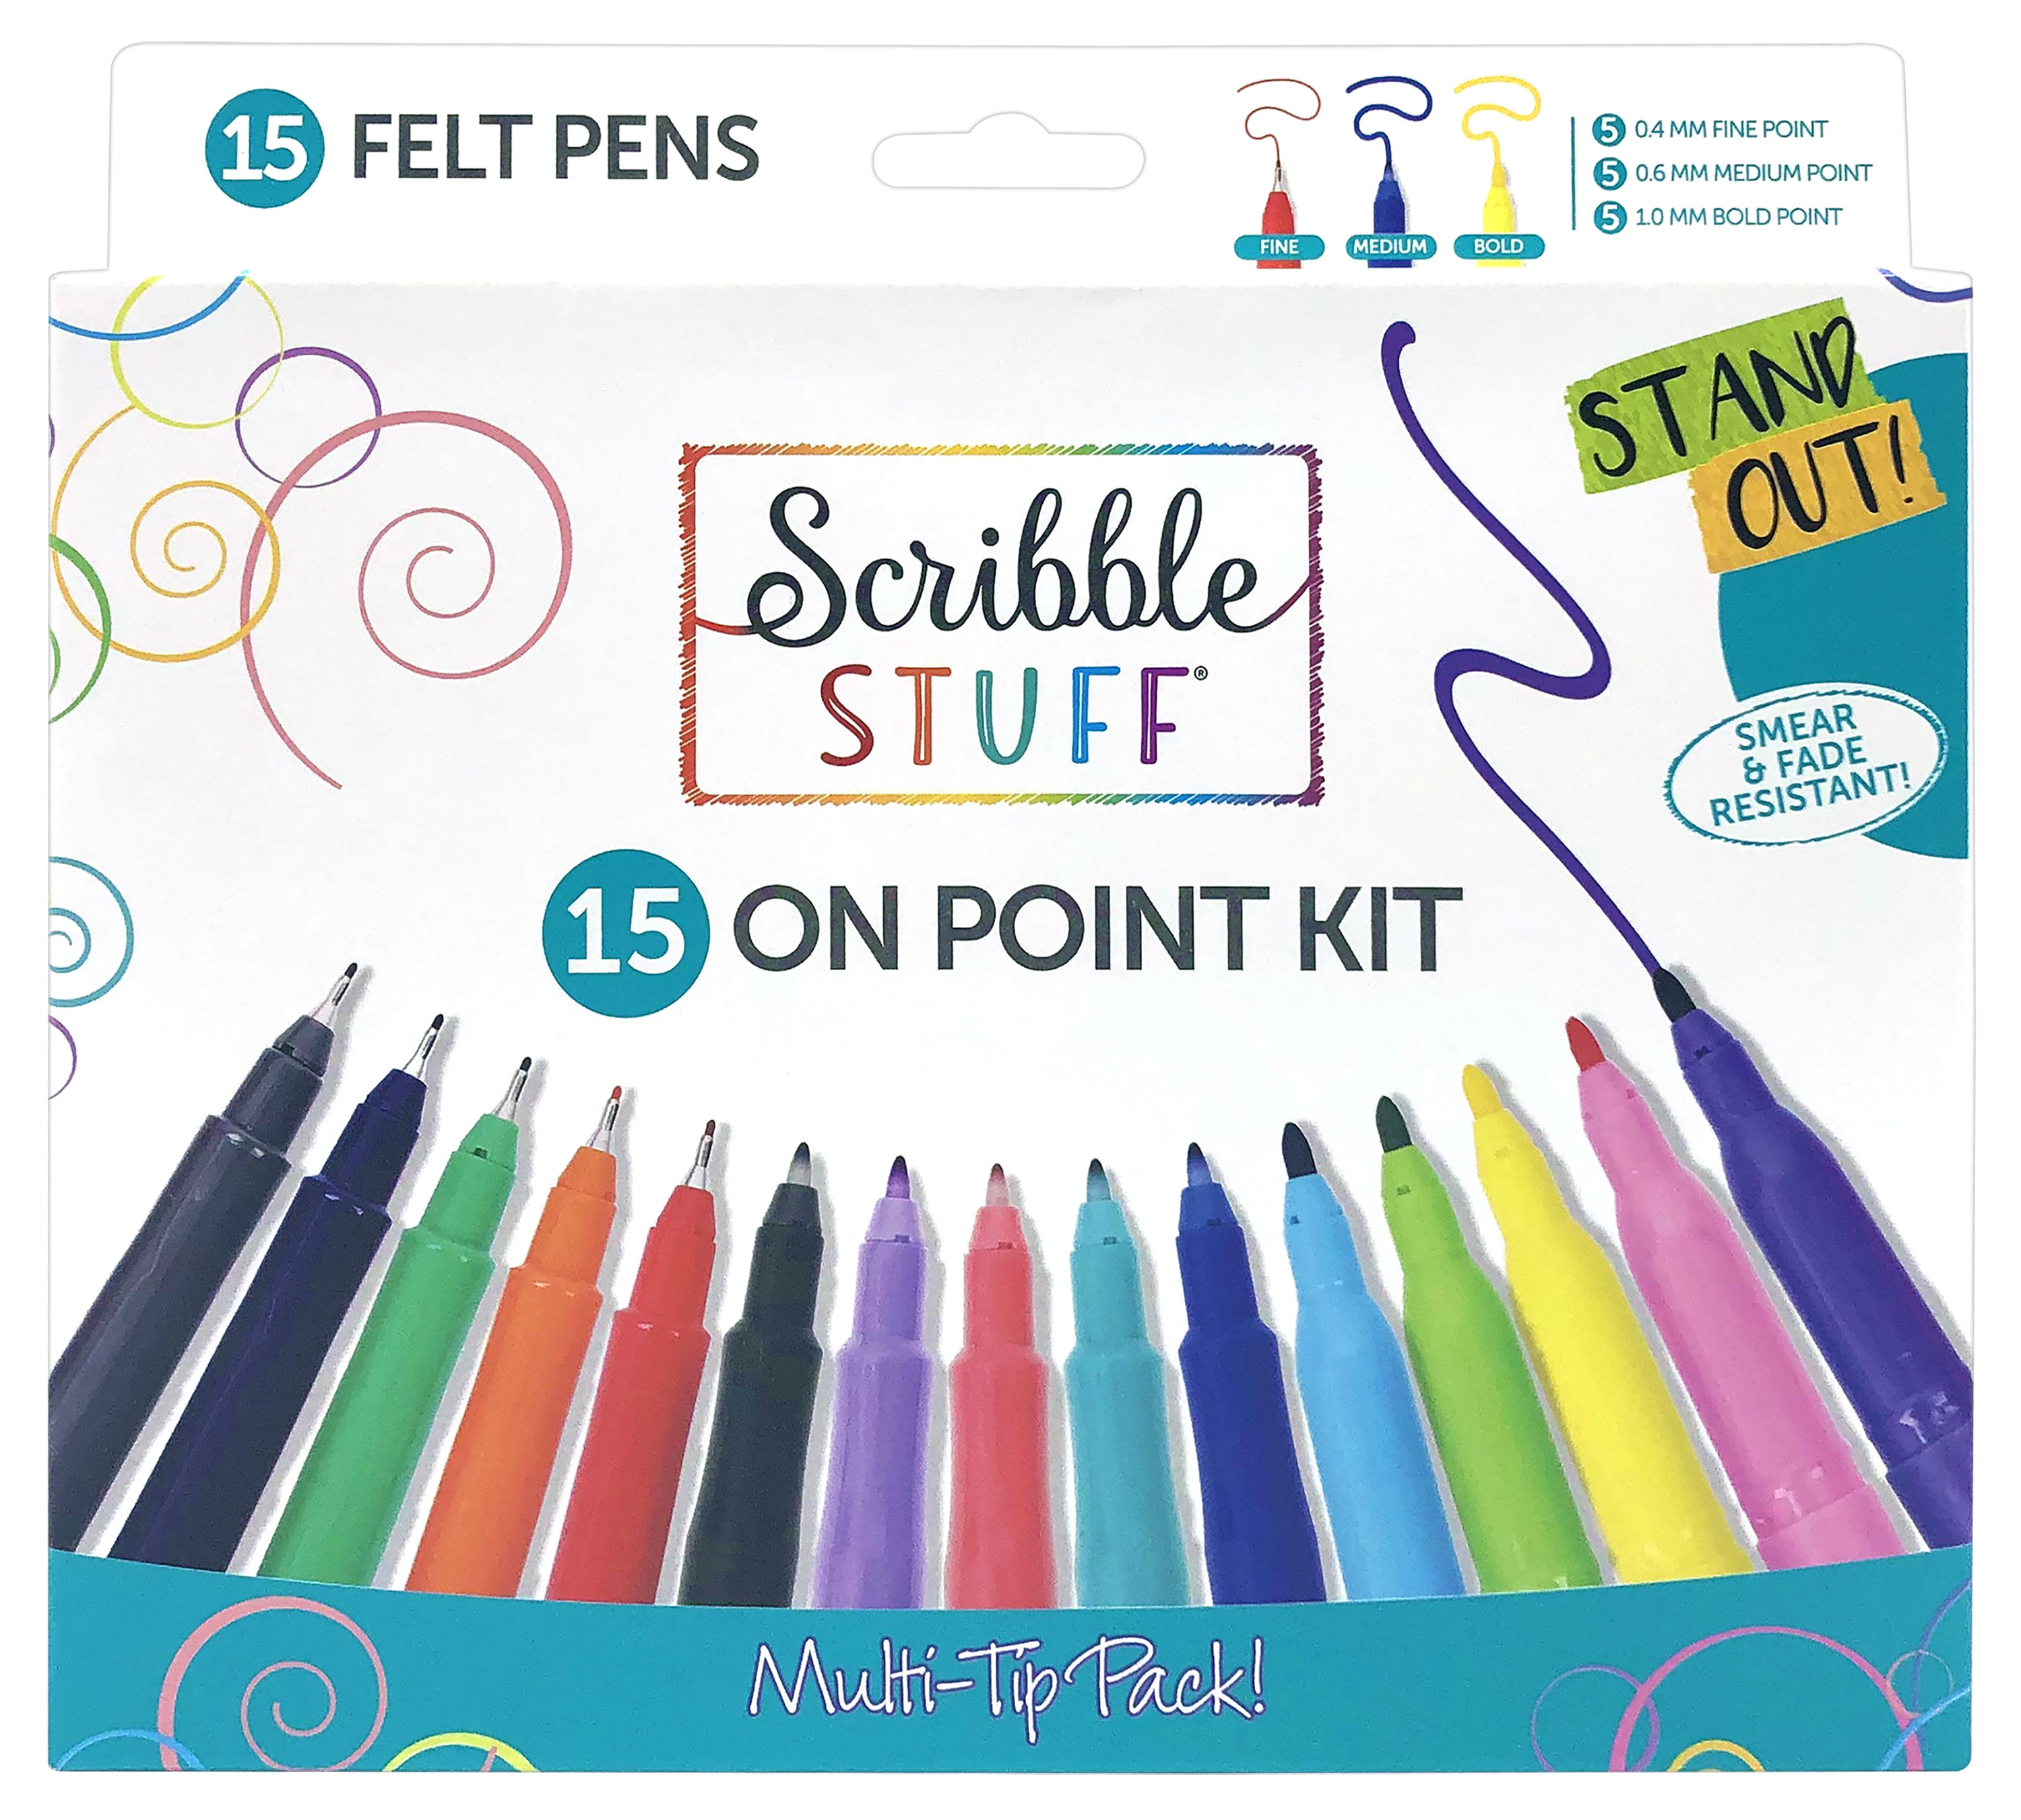  Mr. Pen- Felt Tip Pens, 16 Pack, Assorted Colors